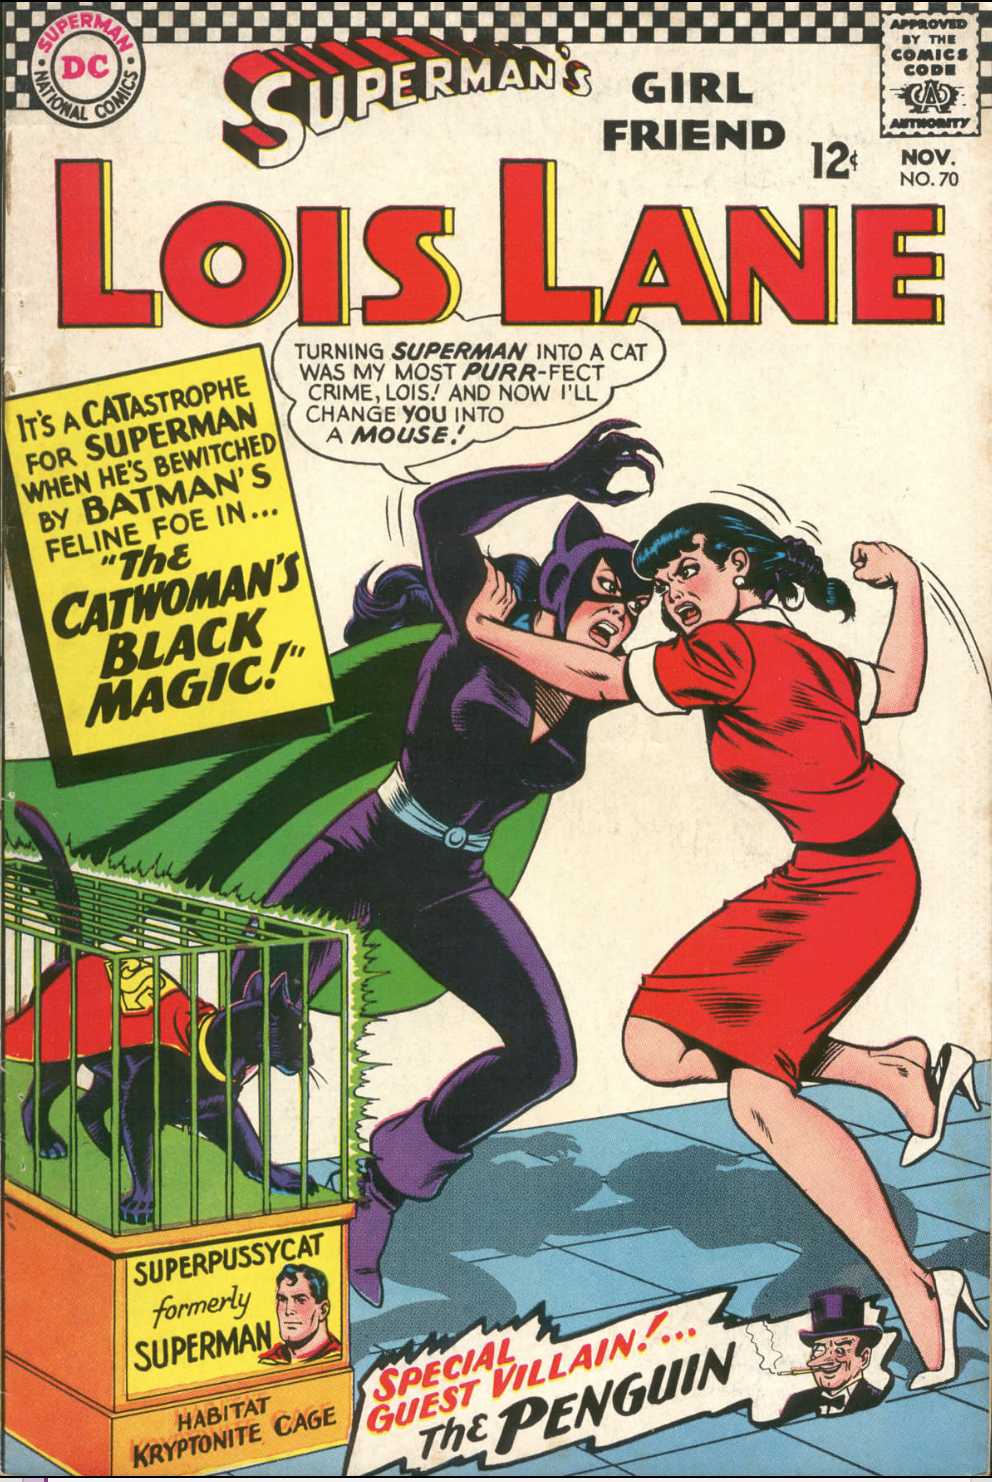 The Cat's Meow (Lois Lane 70/71)